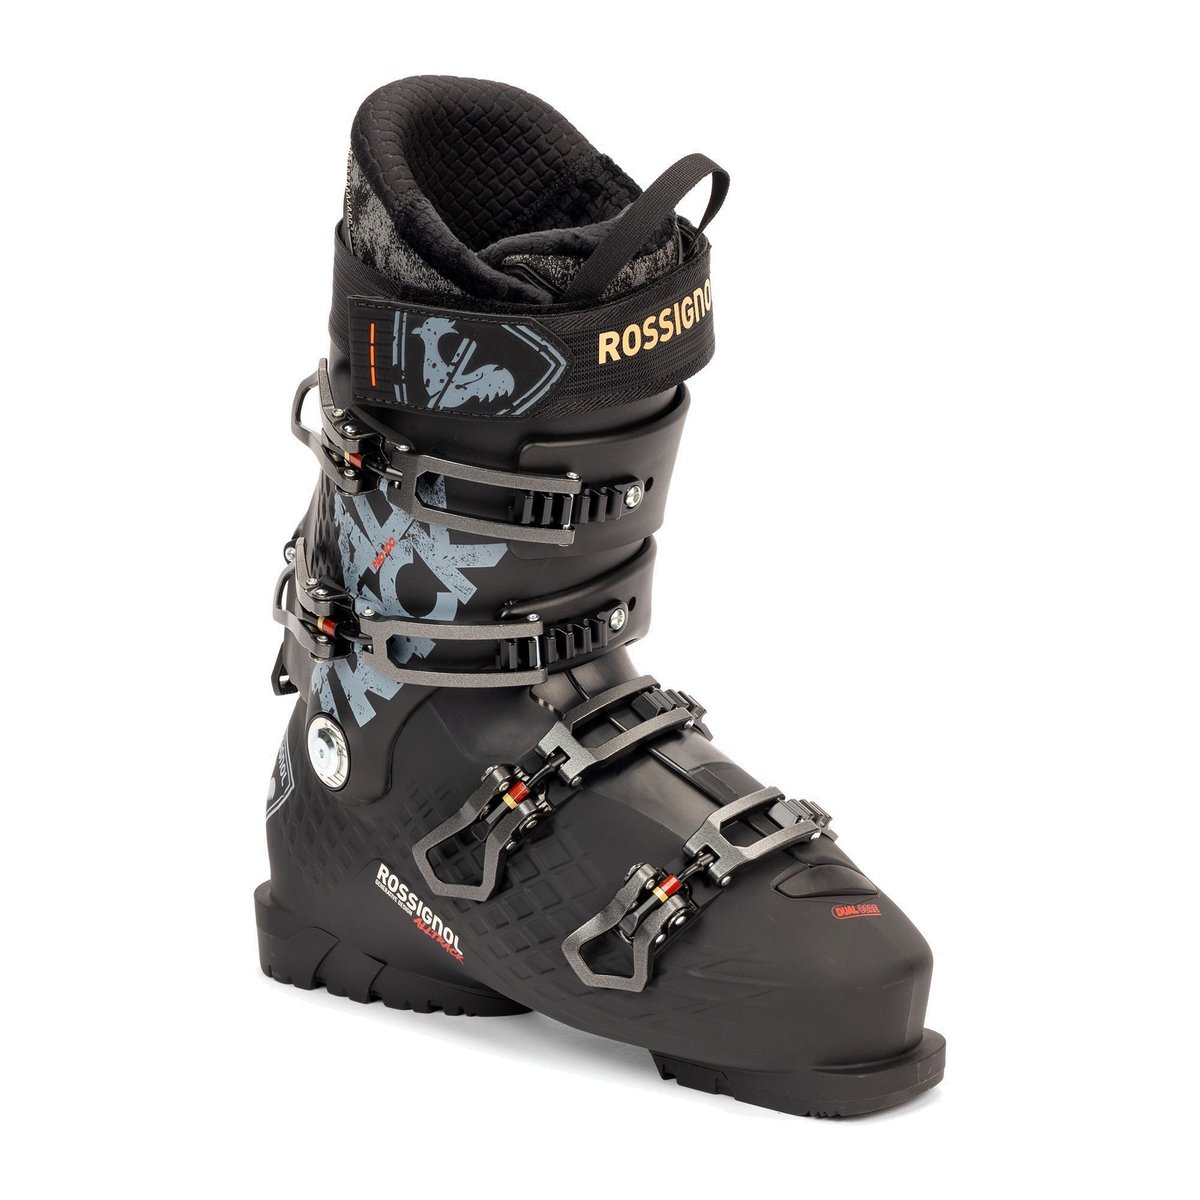 Buty narciarskie Rossignol ALLTRACK czarne PRO 100 RBK3080  28.5 cm